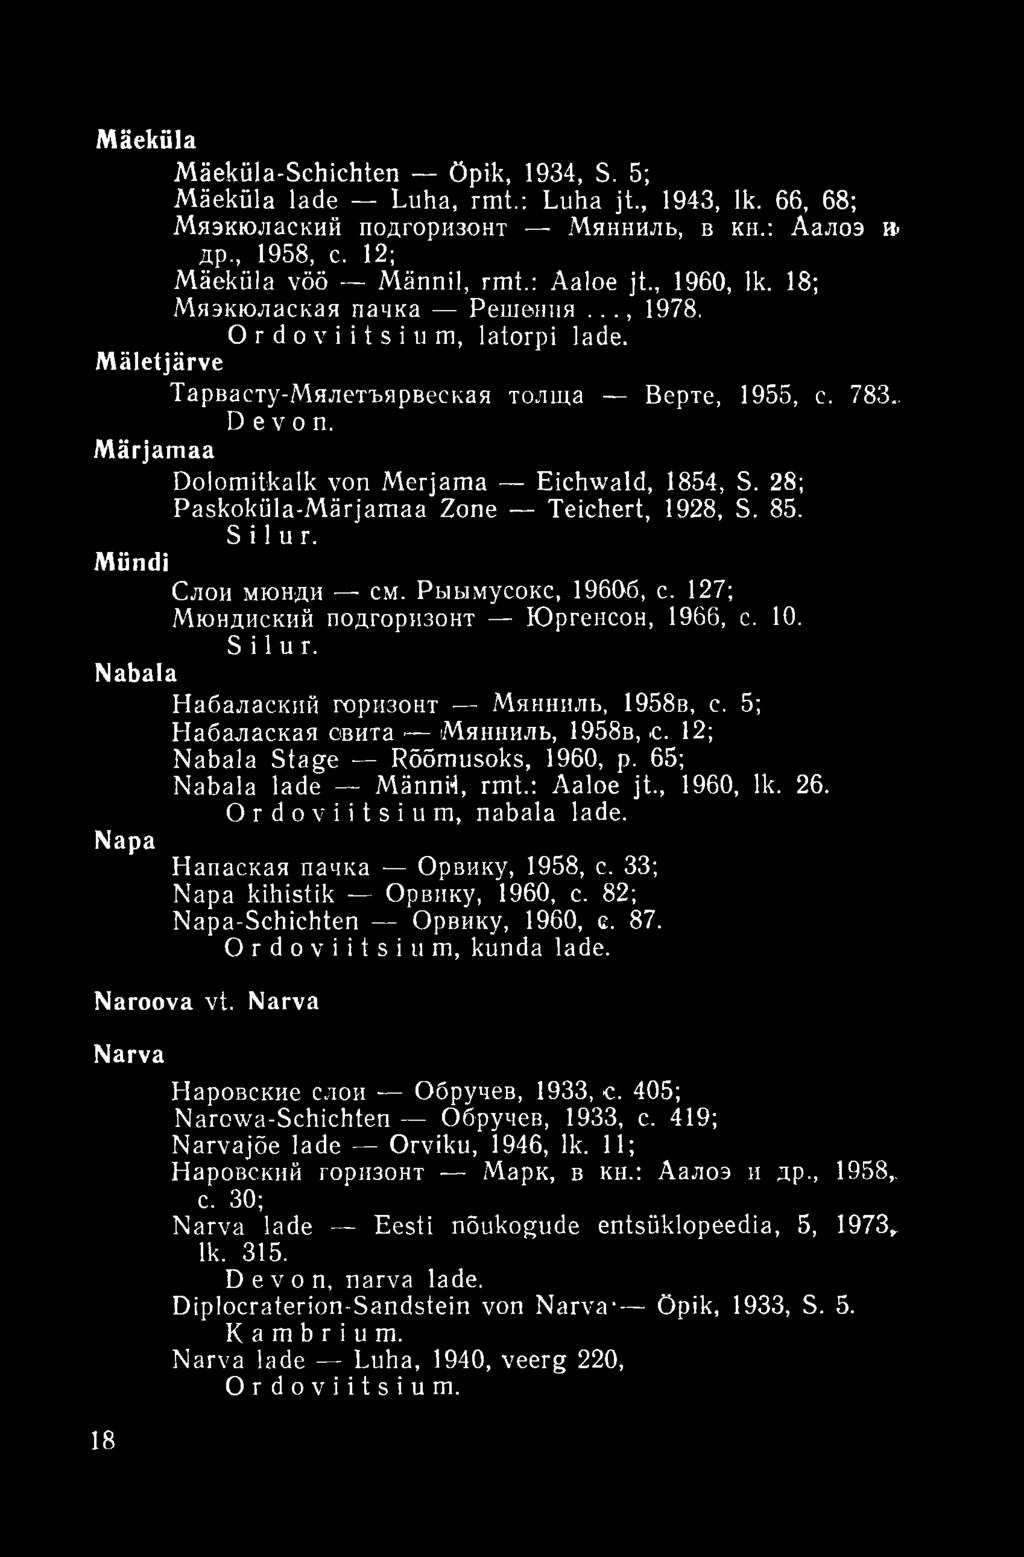 Märjamaa Dolomitkalk von Merjama Eichwald, 1854, S. 28; Paskoküla-Märjamaa Zone Teichert, 1928, S. 85. Silur. Mündi Слои мюнди см. Рыымусокс, 19606, с. 127; Мюндиский подгоризонт Юргенсон, 1966, с.